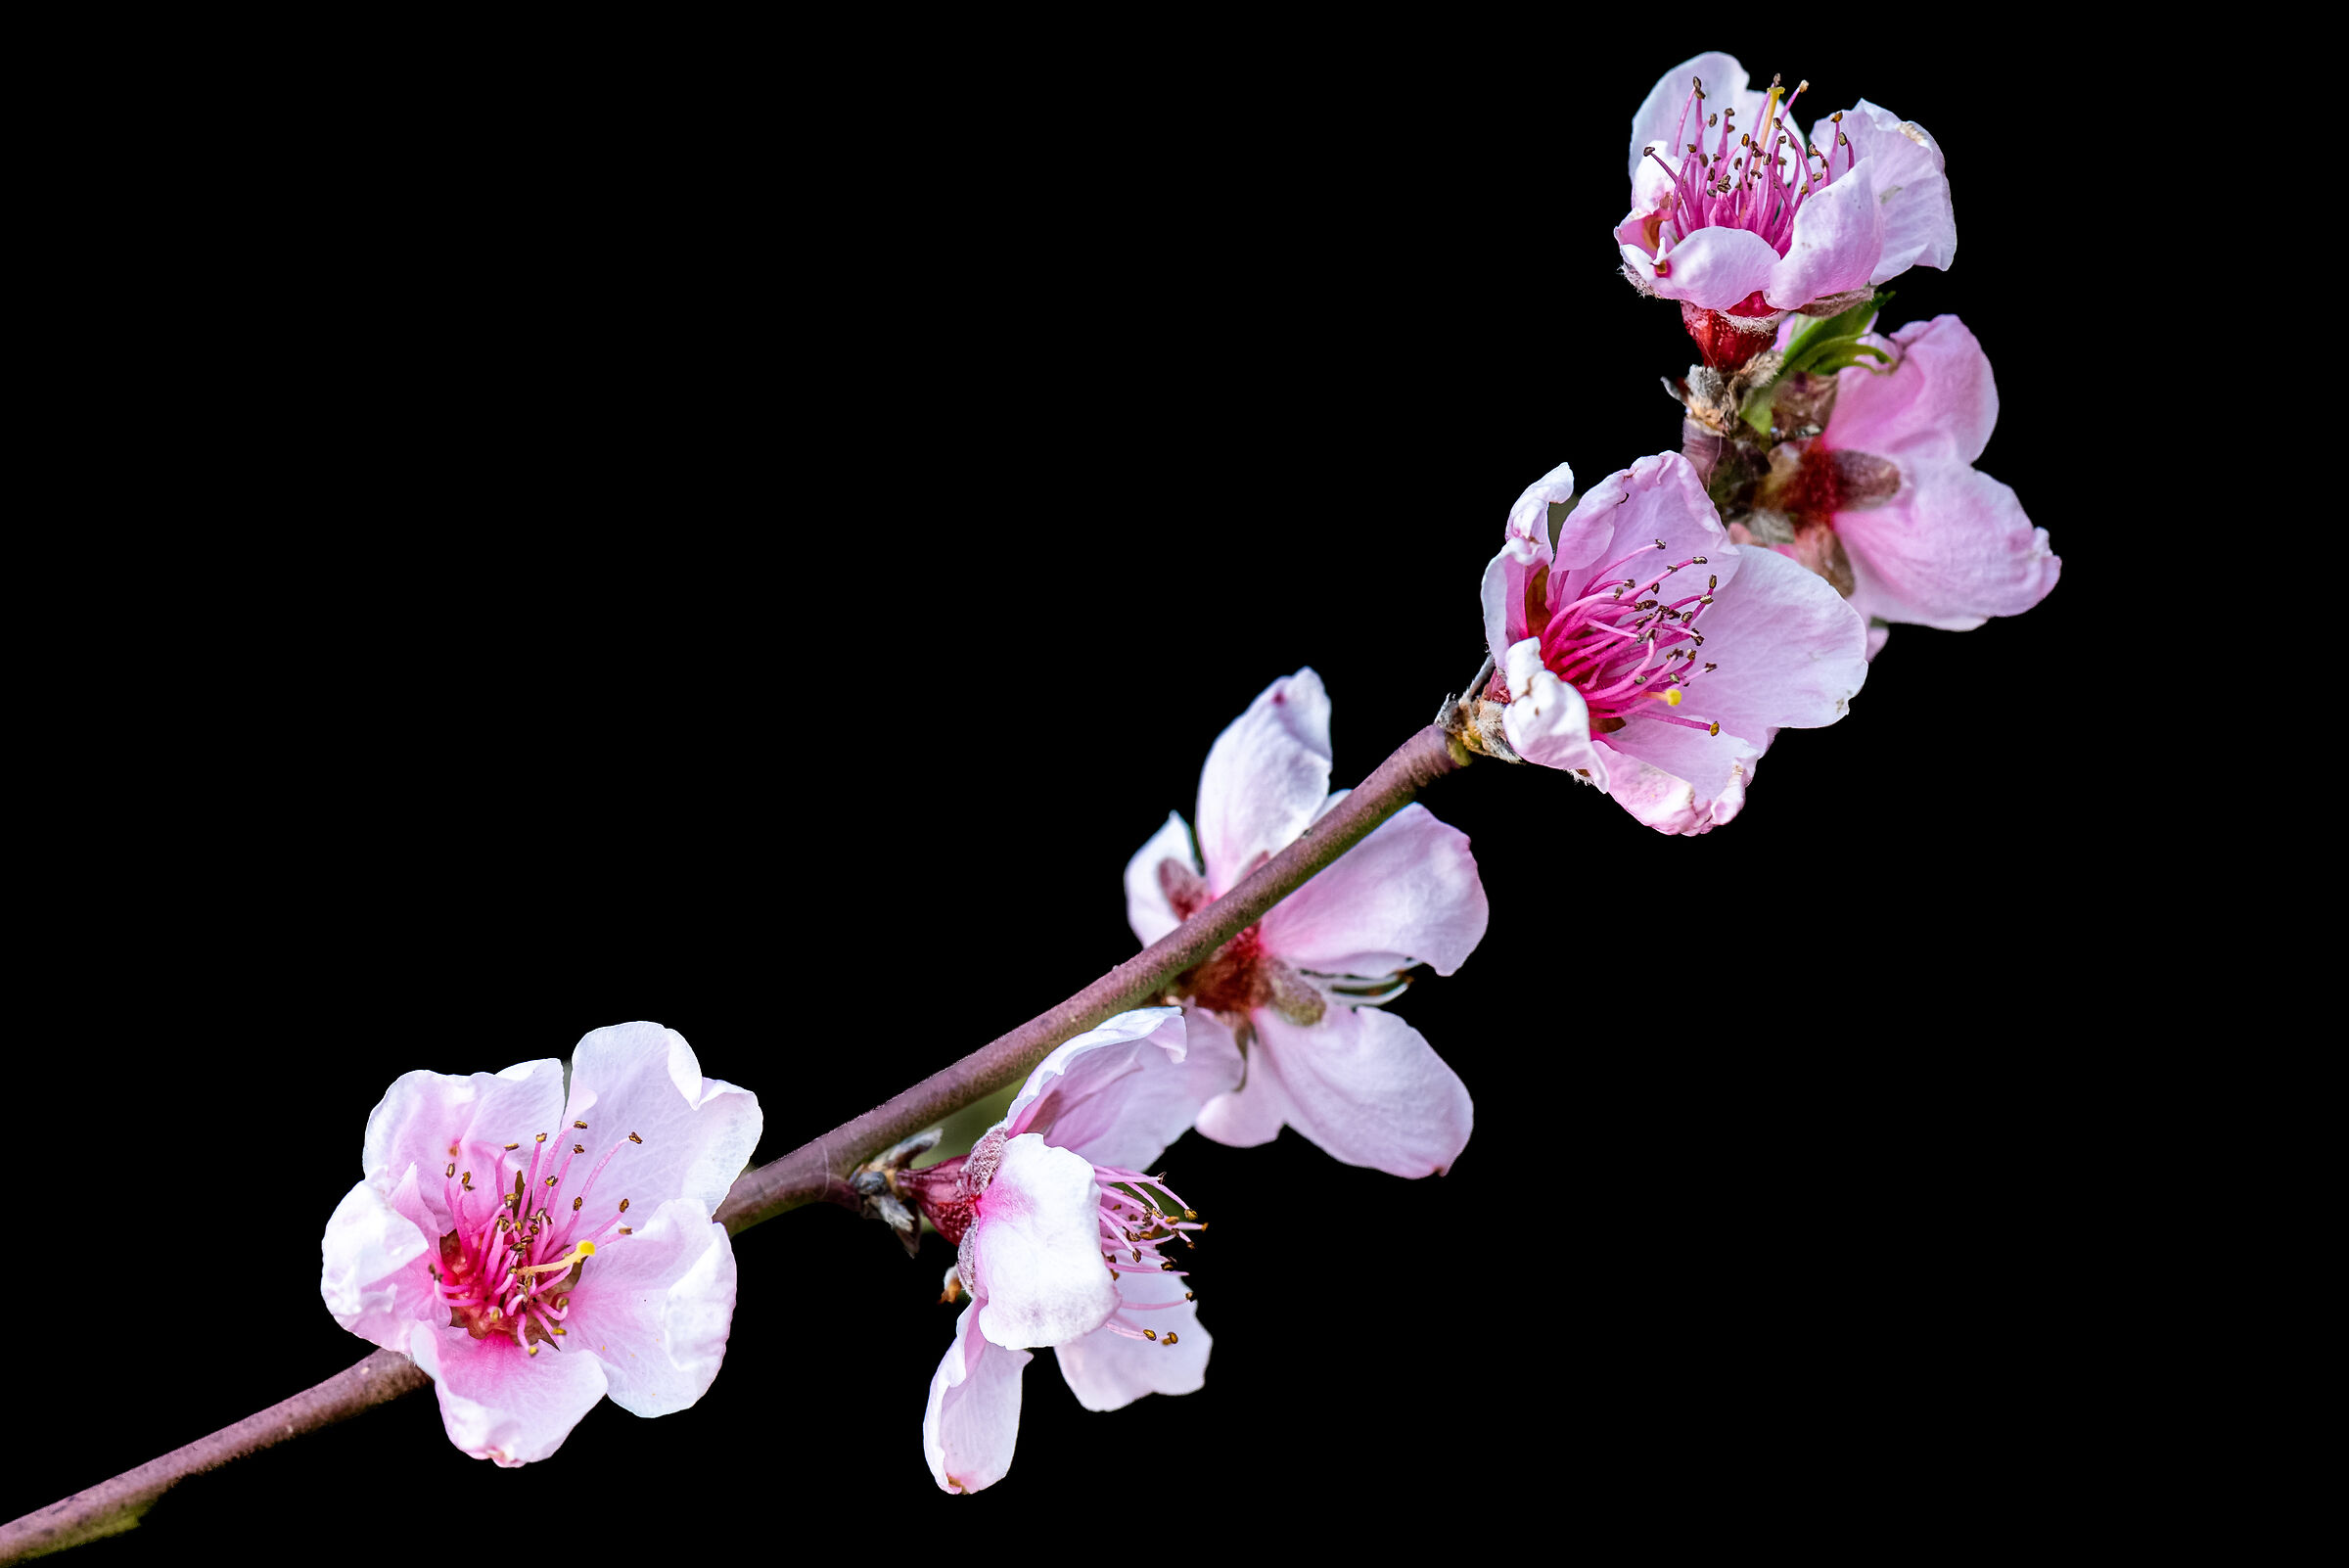 Peach blossoms ......